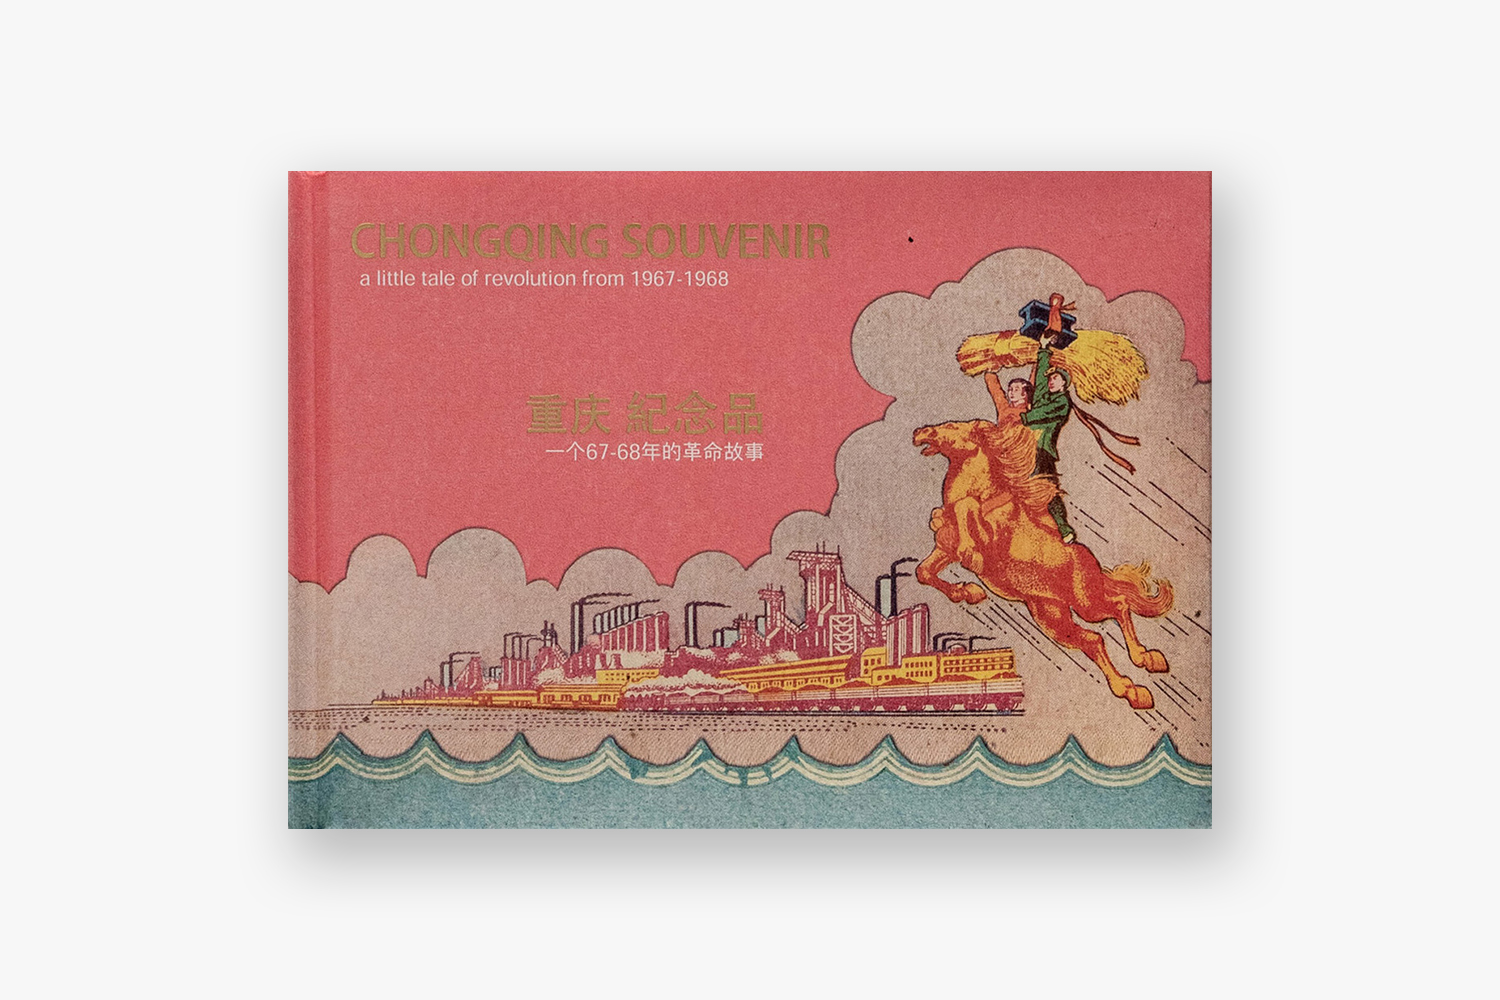 CHONGQING SOUVENIR cover1 - Chongching Souvenir |  - CHONGQING SOUVENIR – a little tale of Revolution 1967-1968